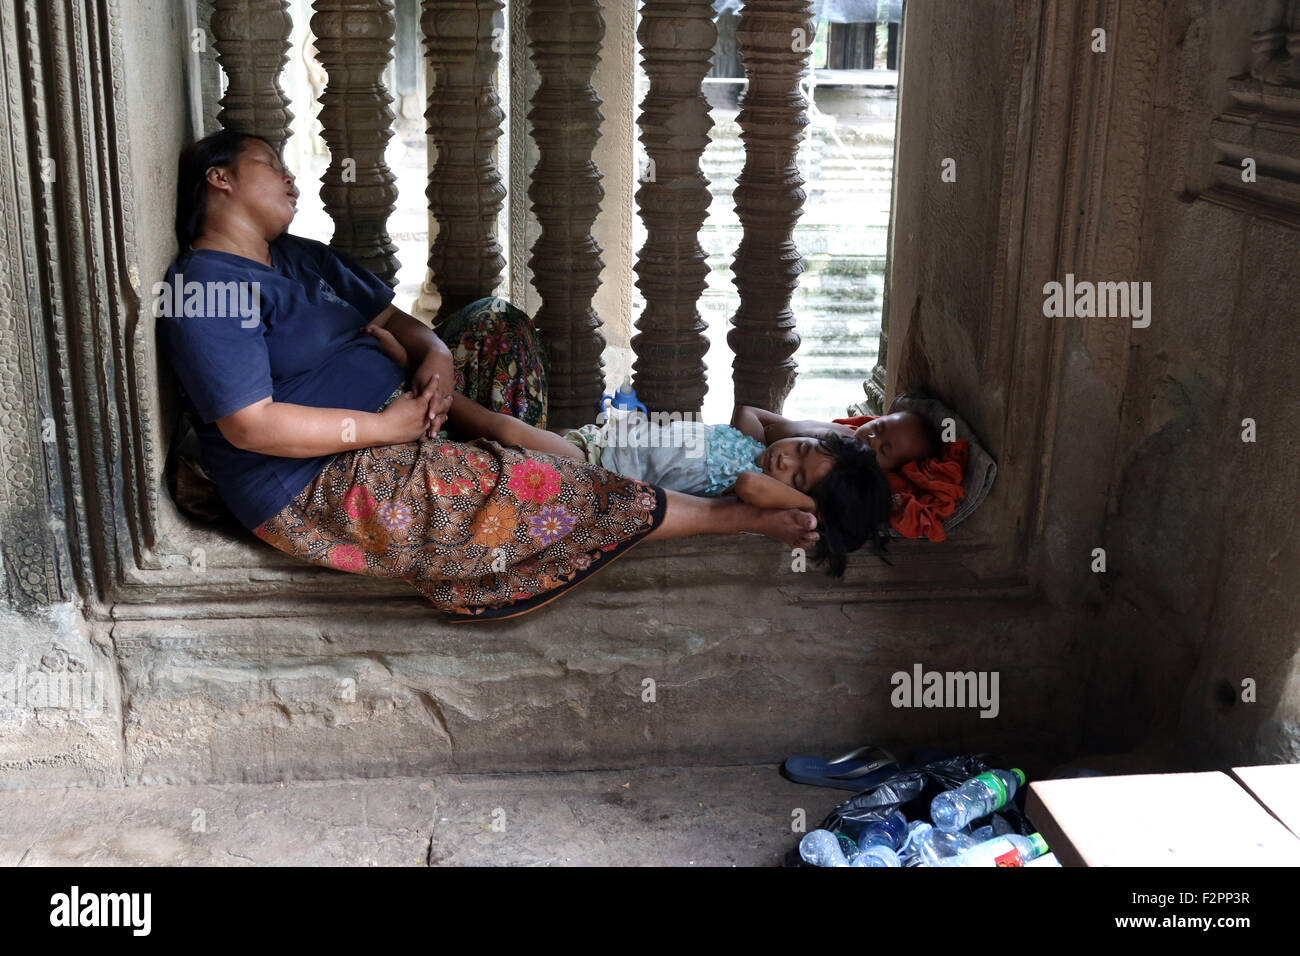 Woman child mum kids asleep Angkor Wat inside Stock Photo